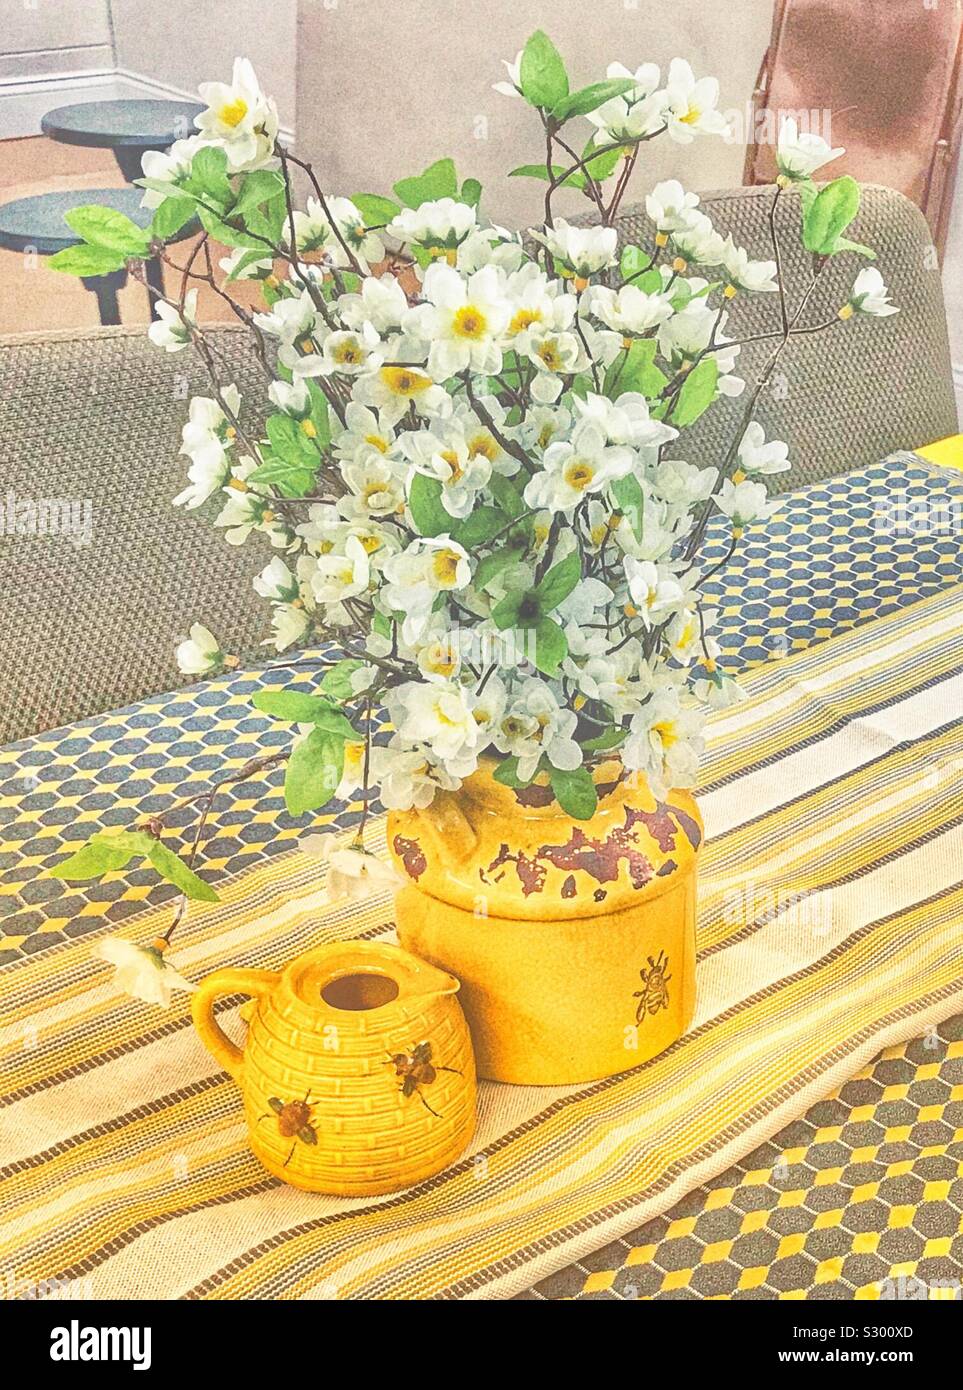 Honeybee themed yellow ware with white silk blossom arrangement Stock Photo